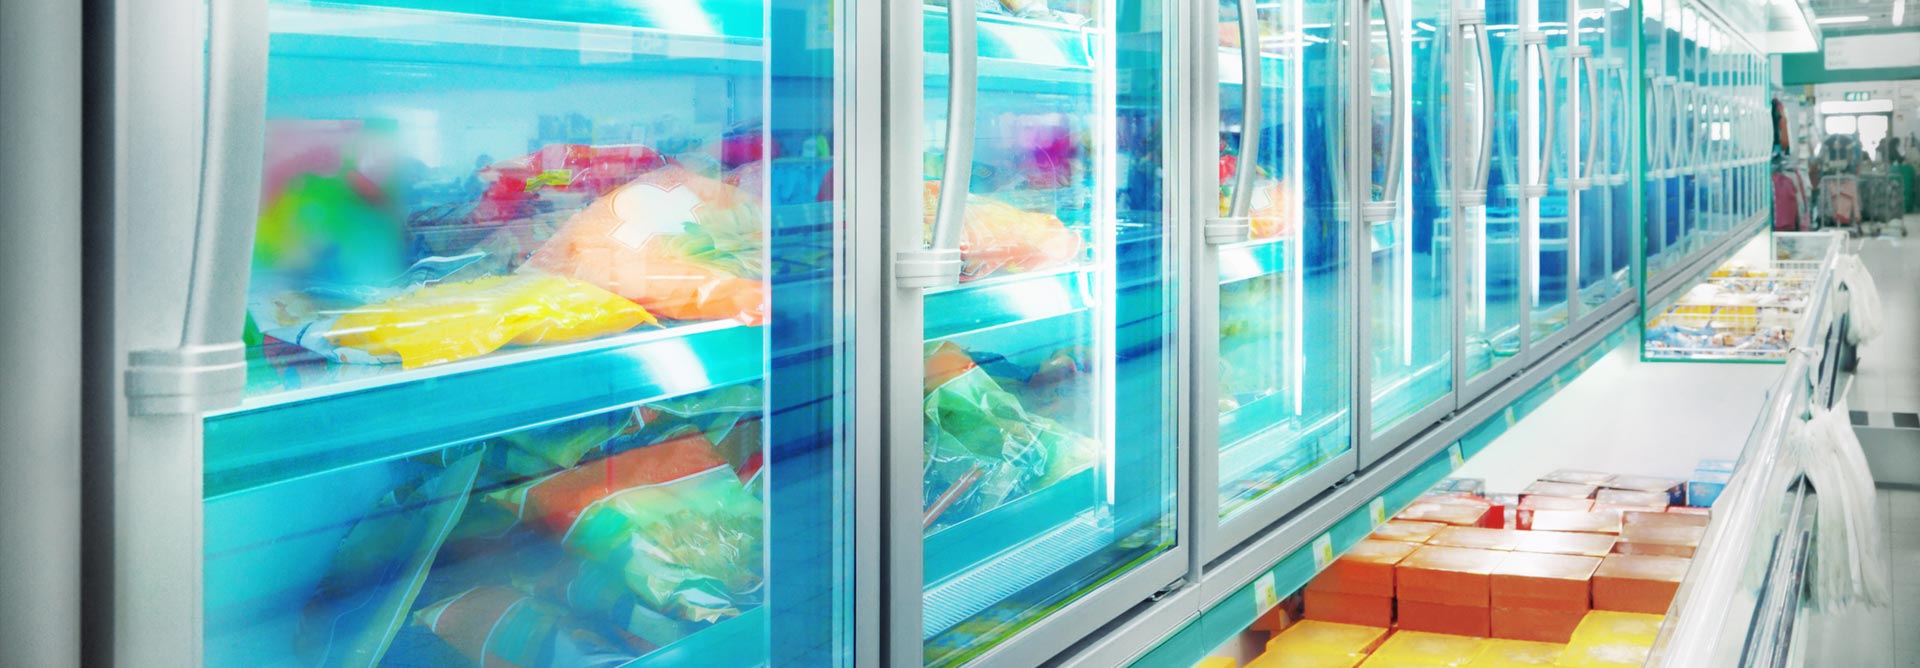 supermarket fridges